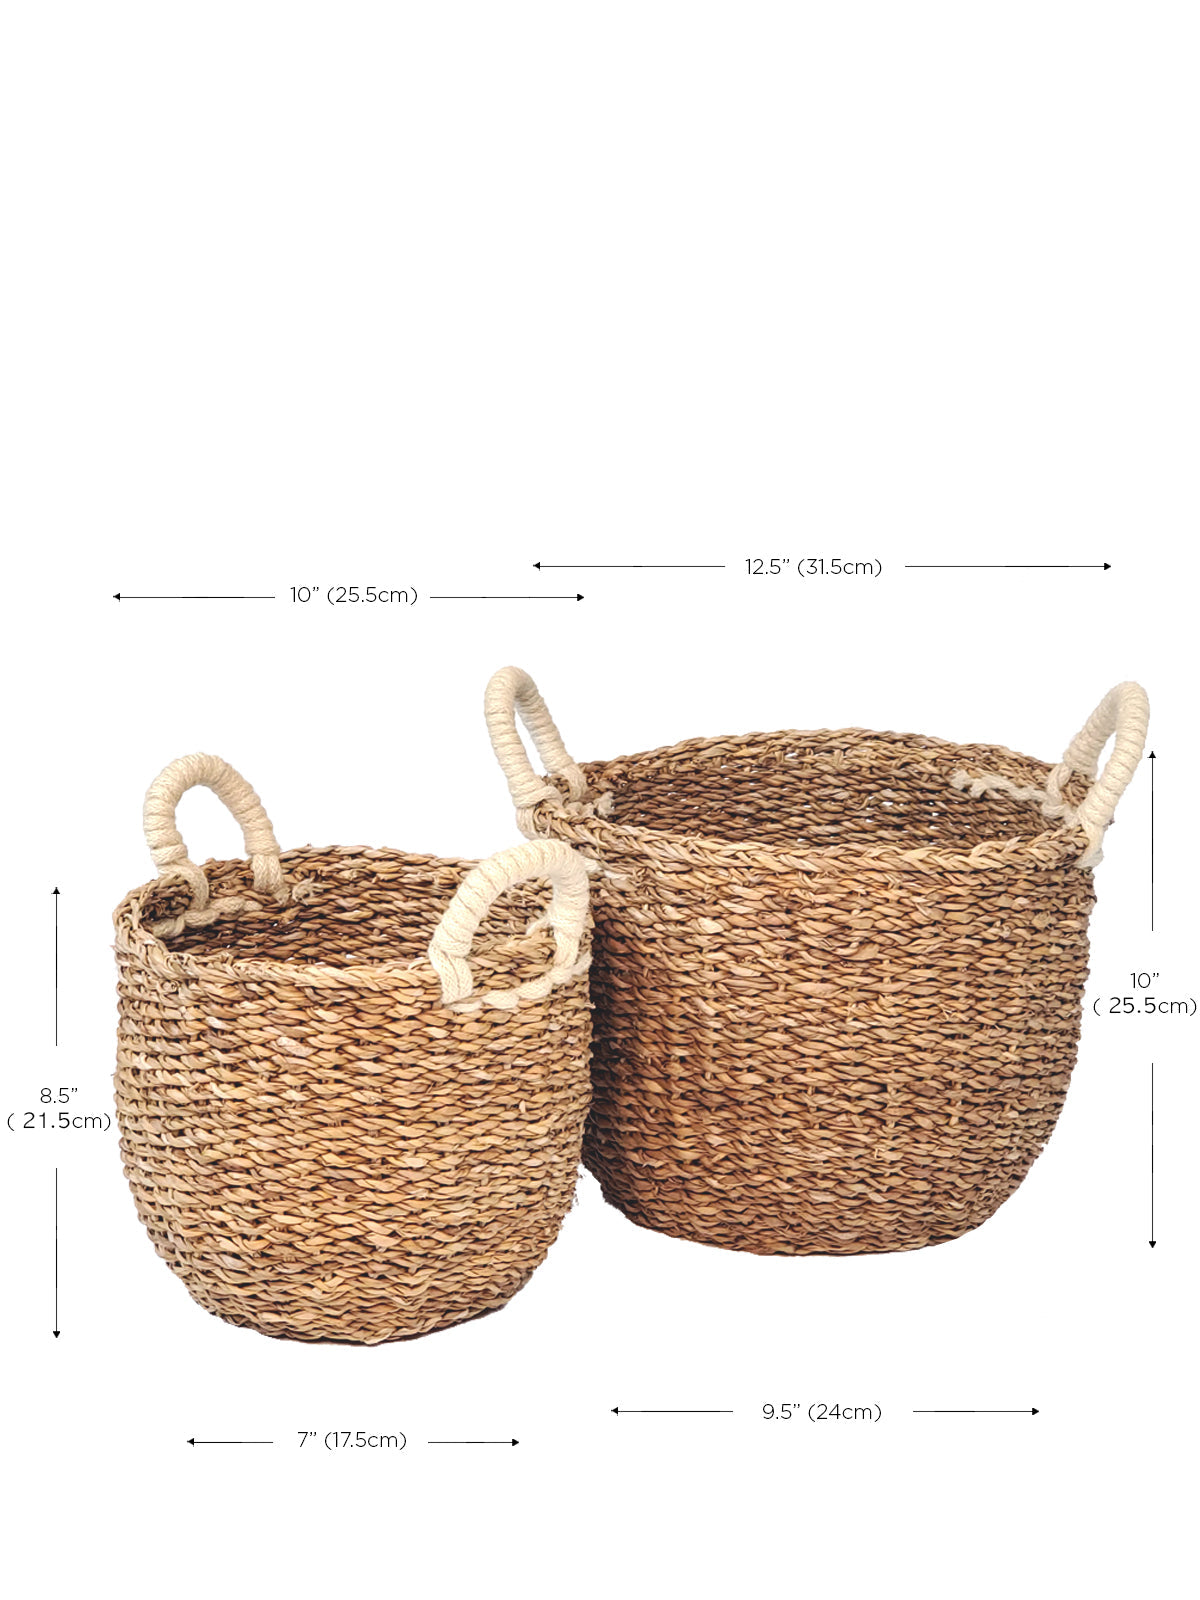 Savar Basket with White Handle